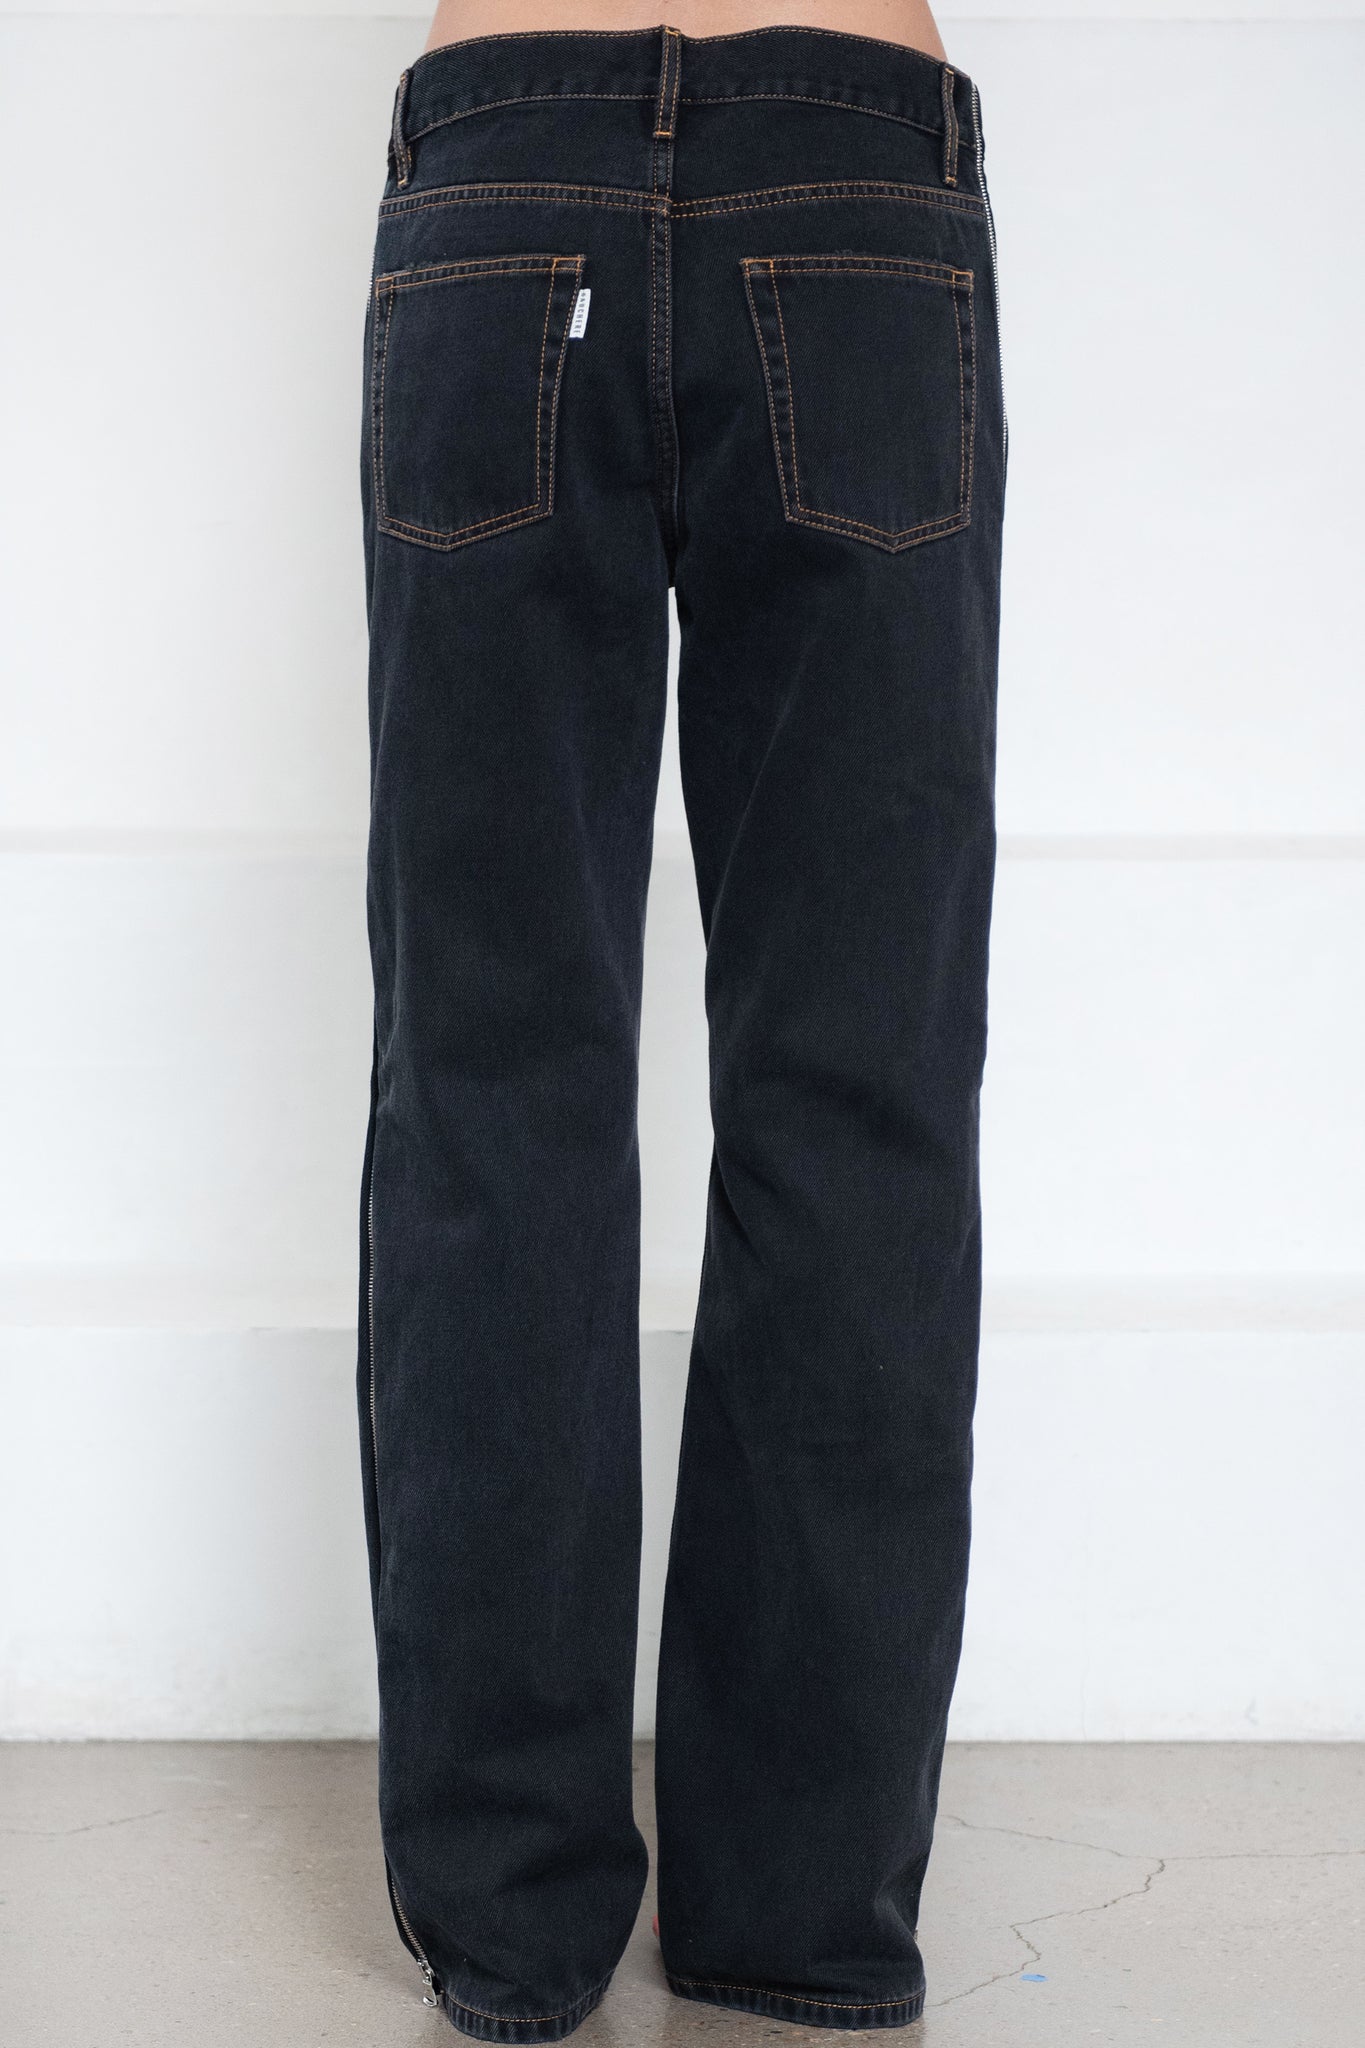 GAUCHERE - Denim Jeans, Black